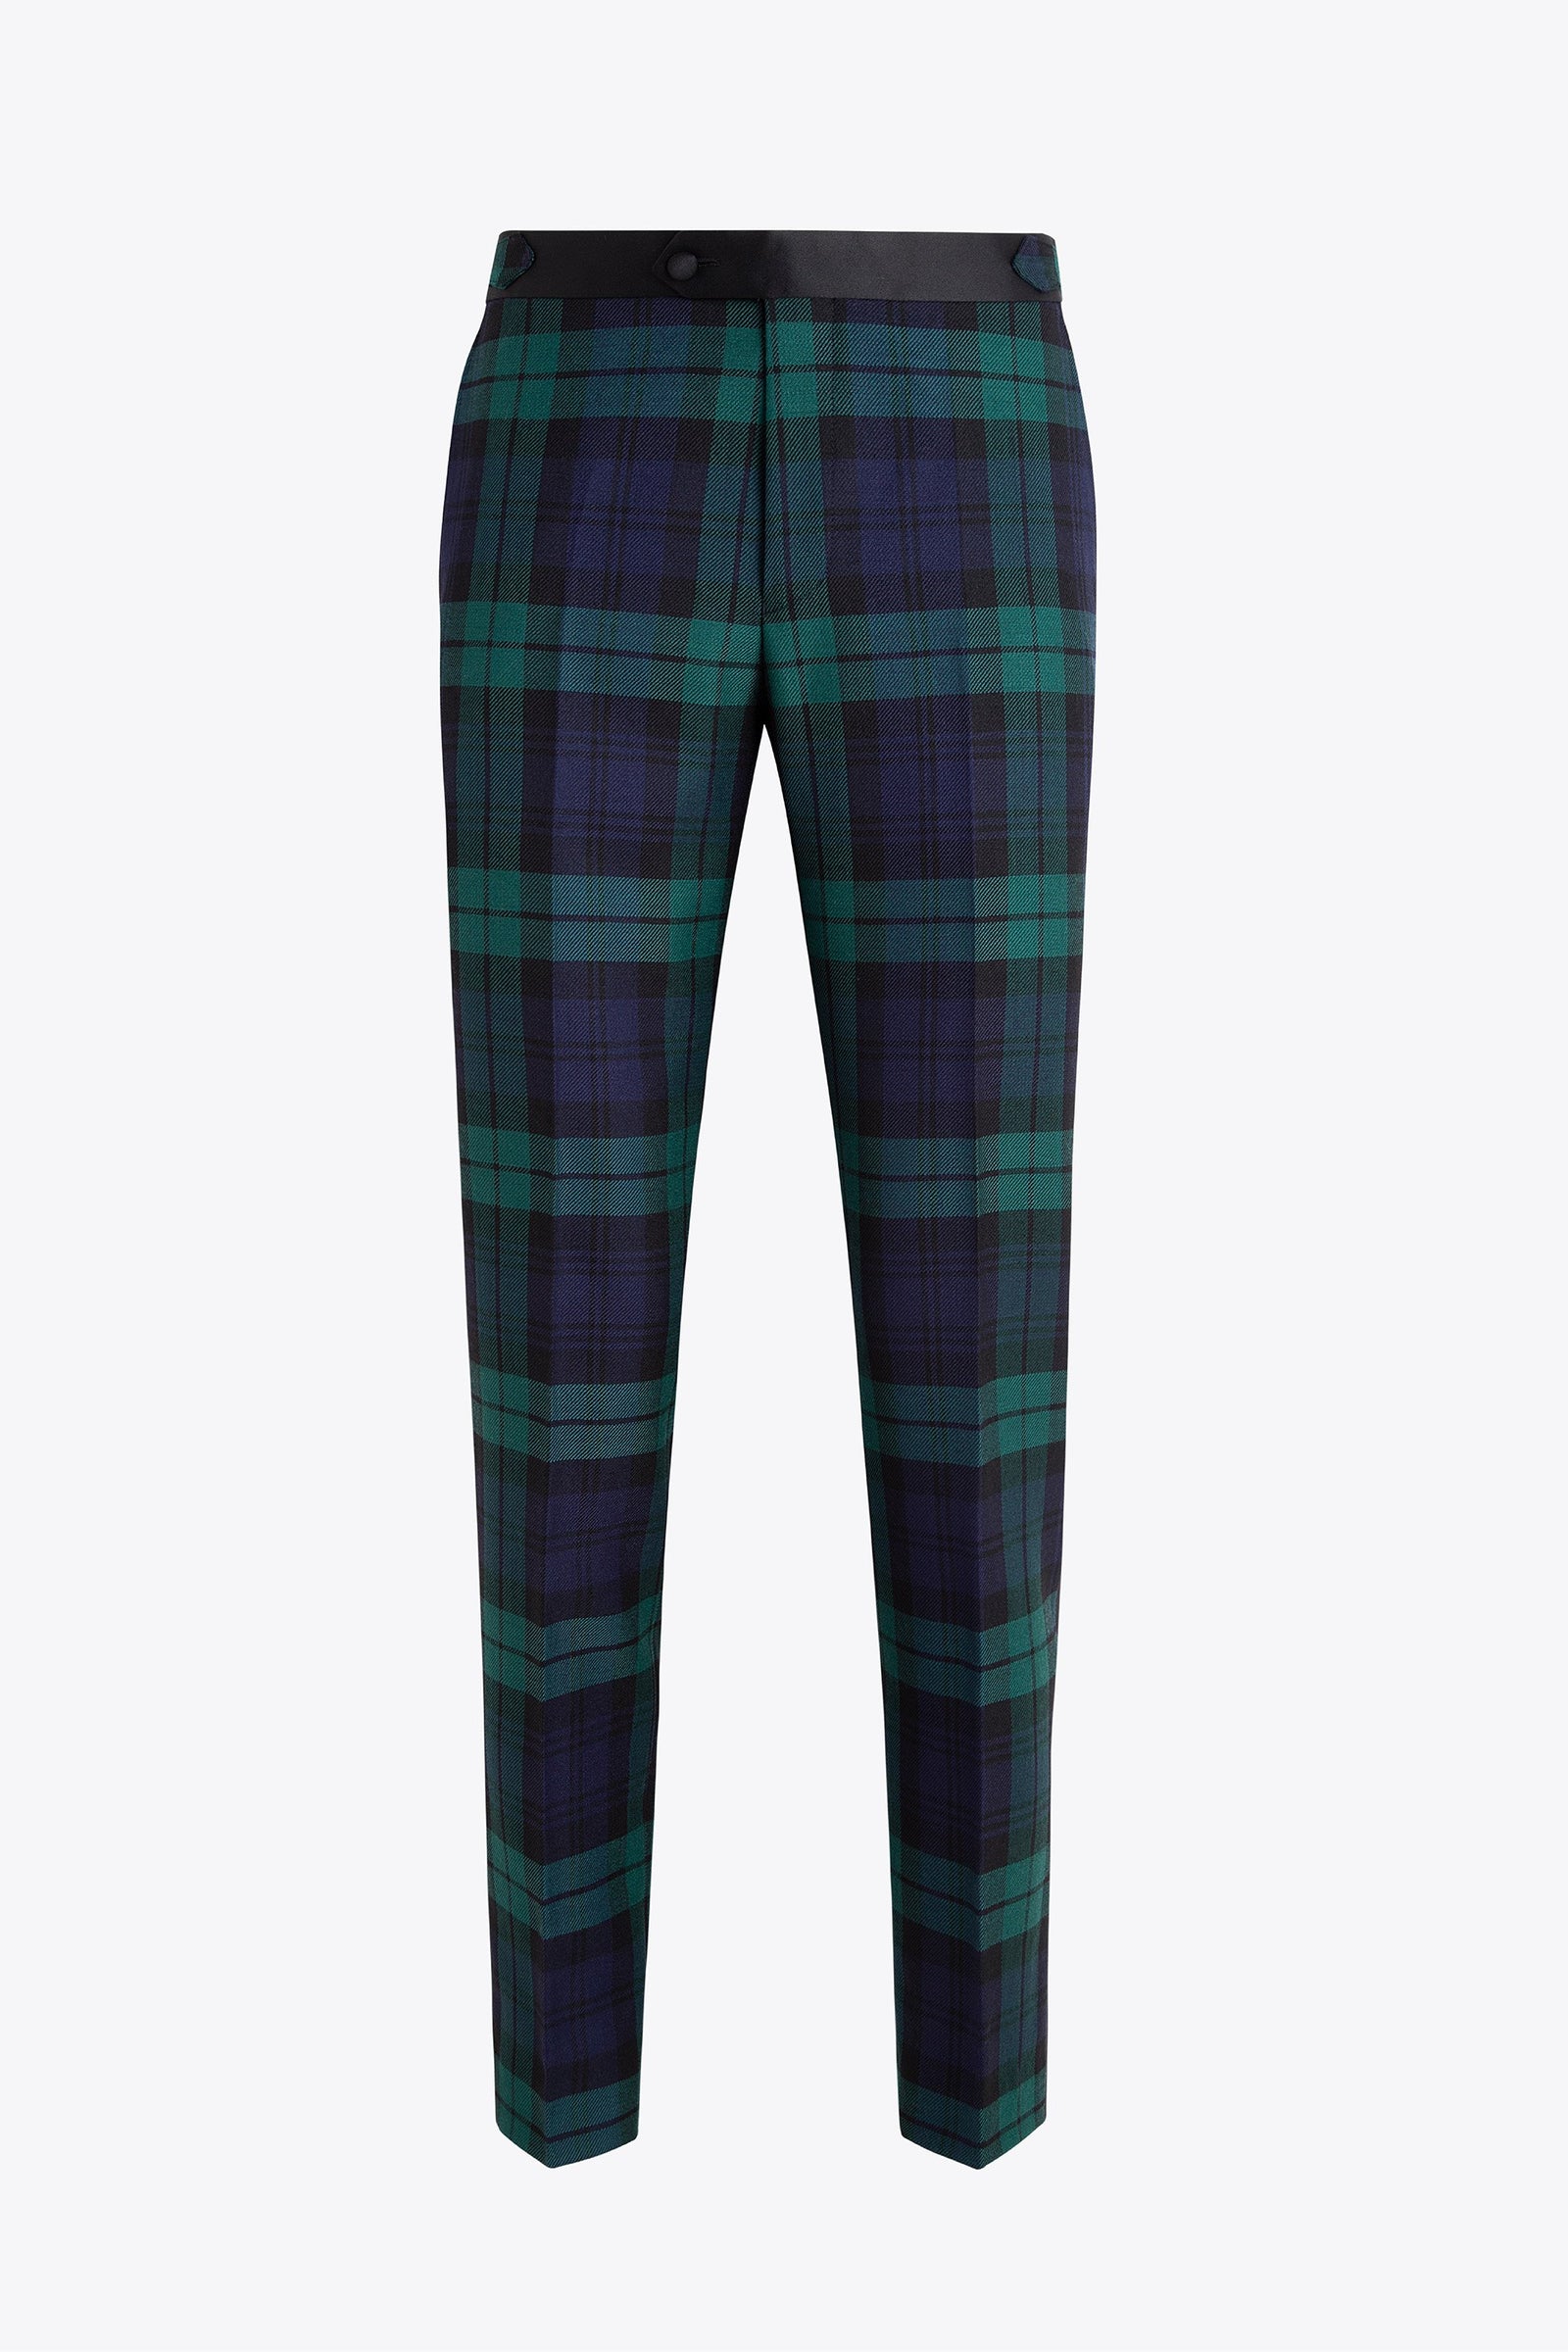 MENS SCOTTISH TRADITIONAL Gunn Tartan Trousers New £49.99 - PicClick UK